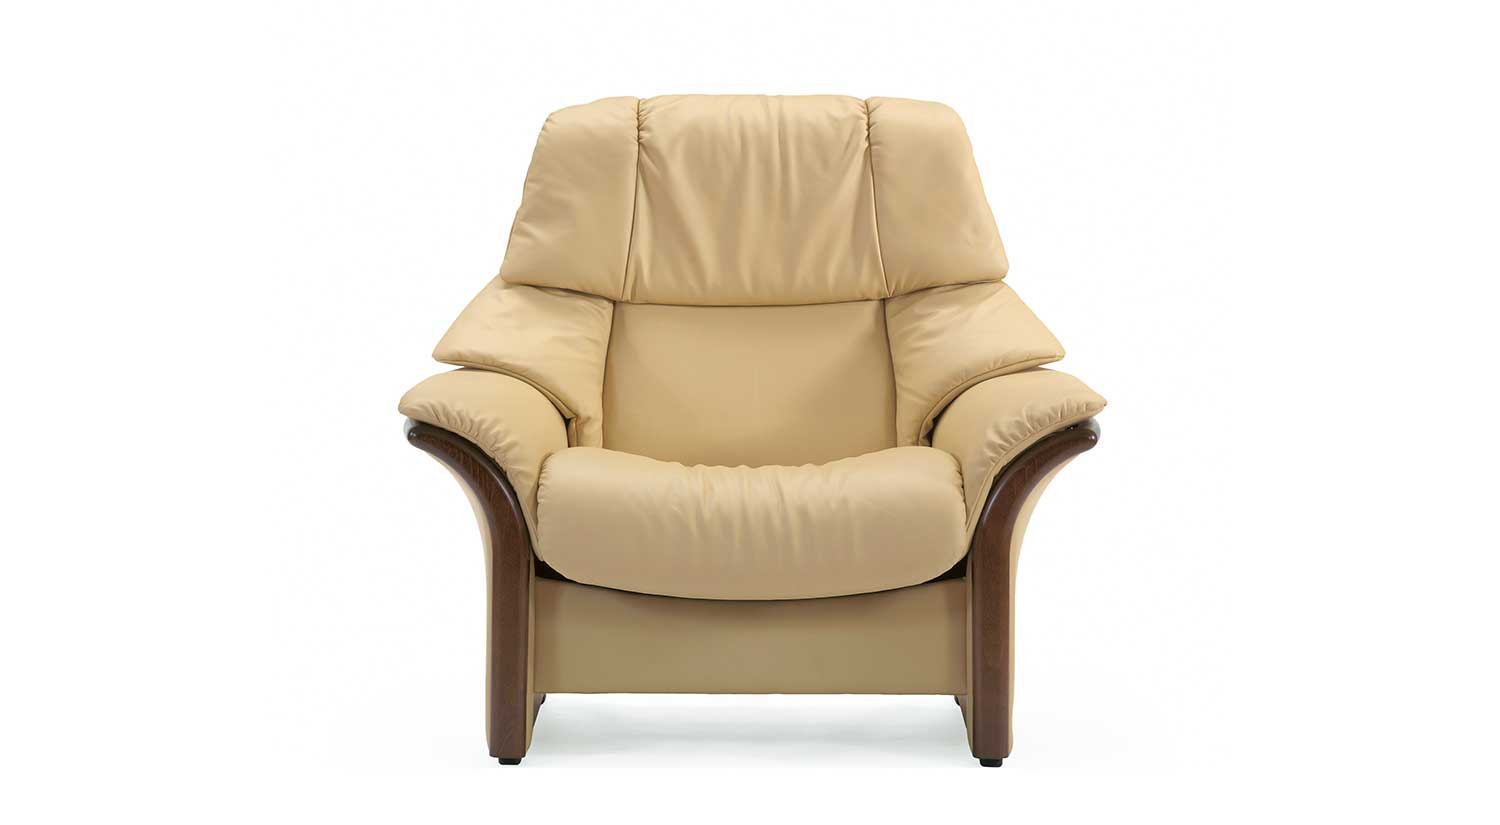 Eldorado Stressless Highback Chair, Stressless Leather Chairs